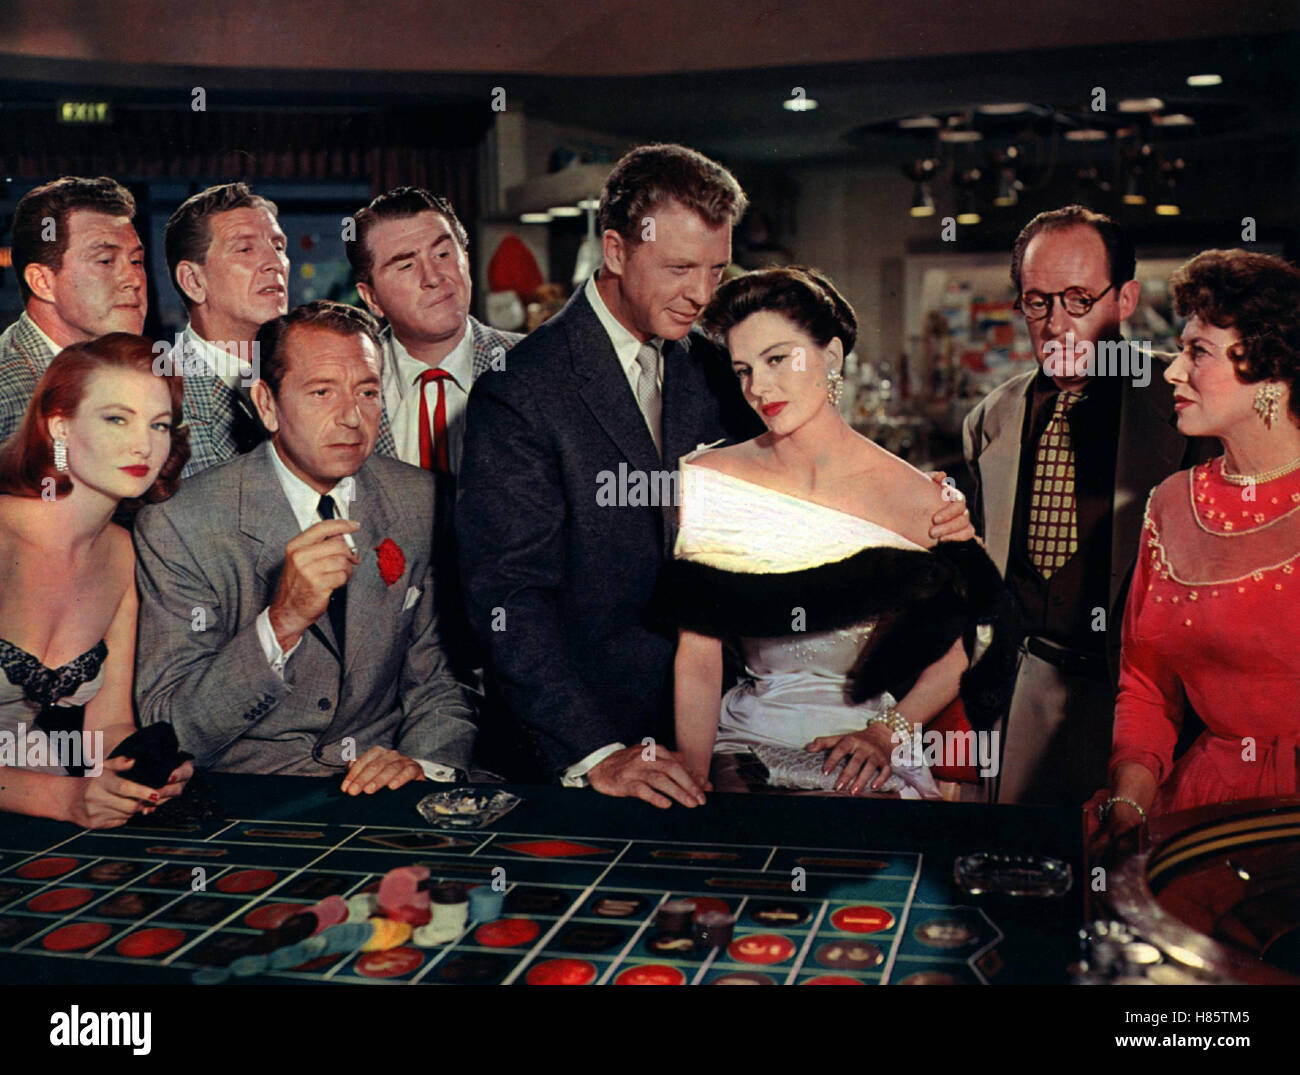 Vintage Las Vegas — Riviera, 1955 - Photo by Las Vegas News Bureau.